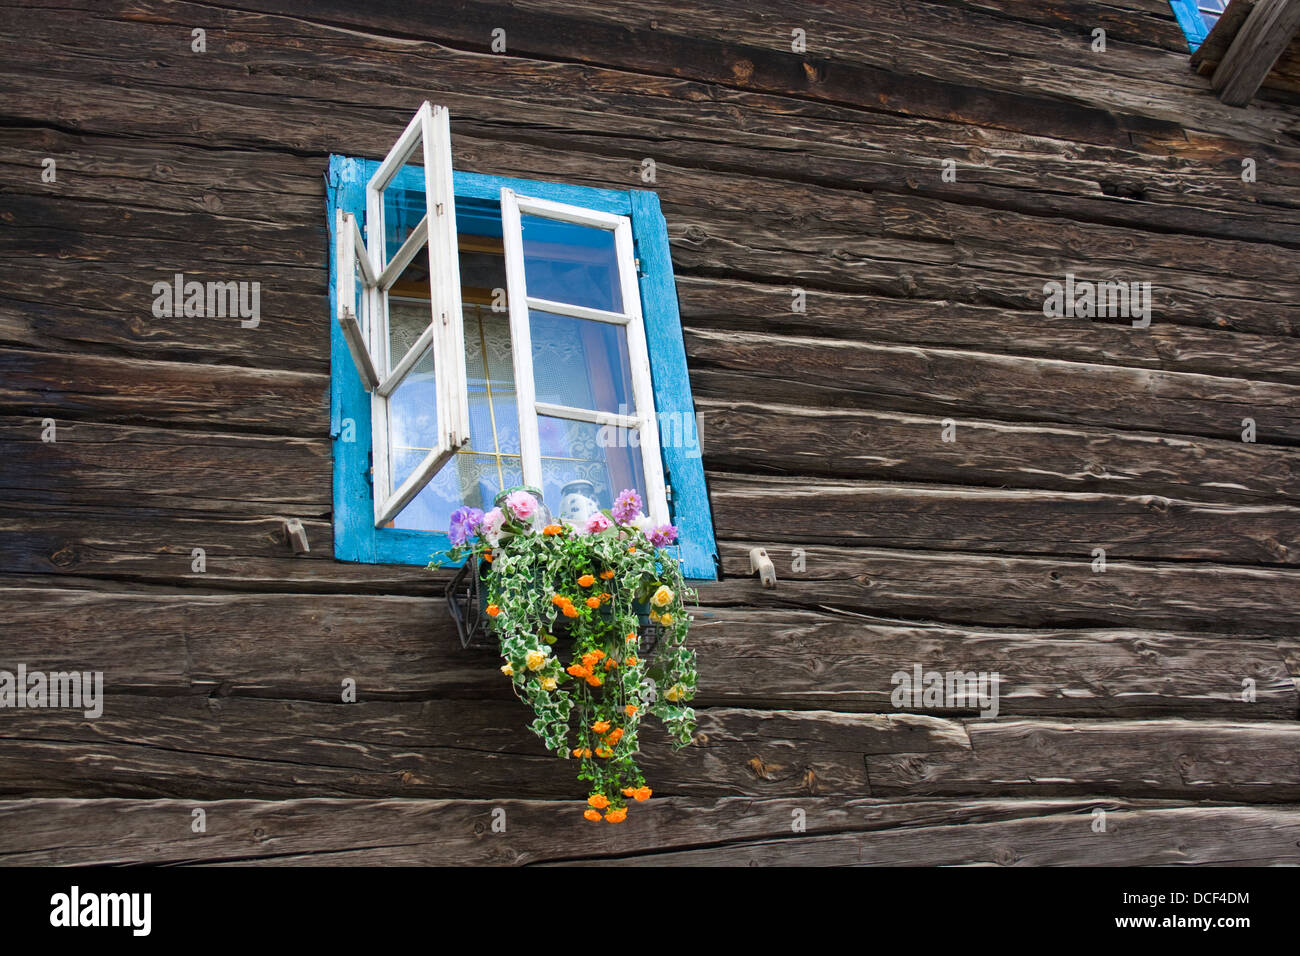 Offenes Fenster in einem alten Holzhaus; aprire la finestra di un antico registro alpine house Foto Stock